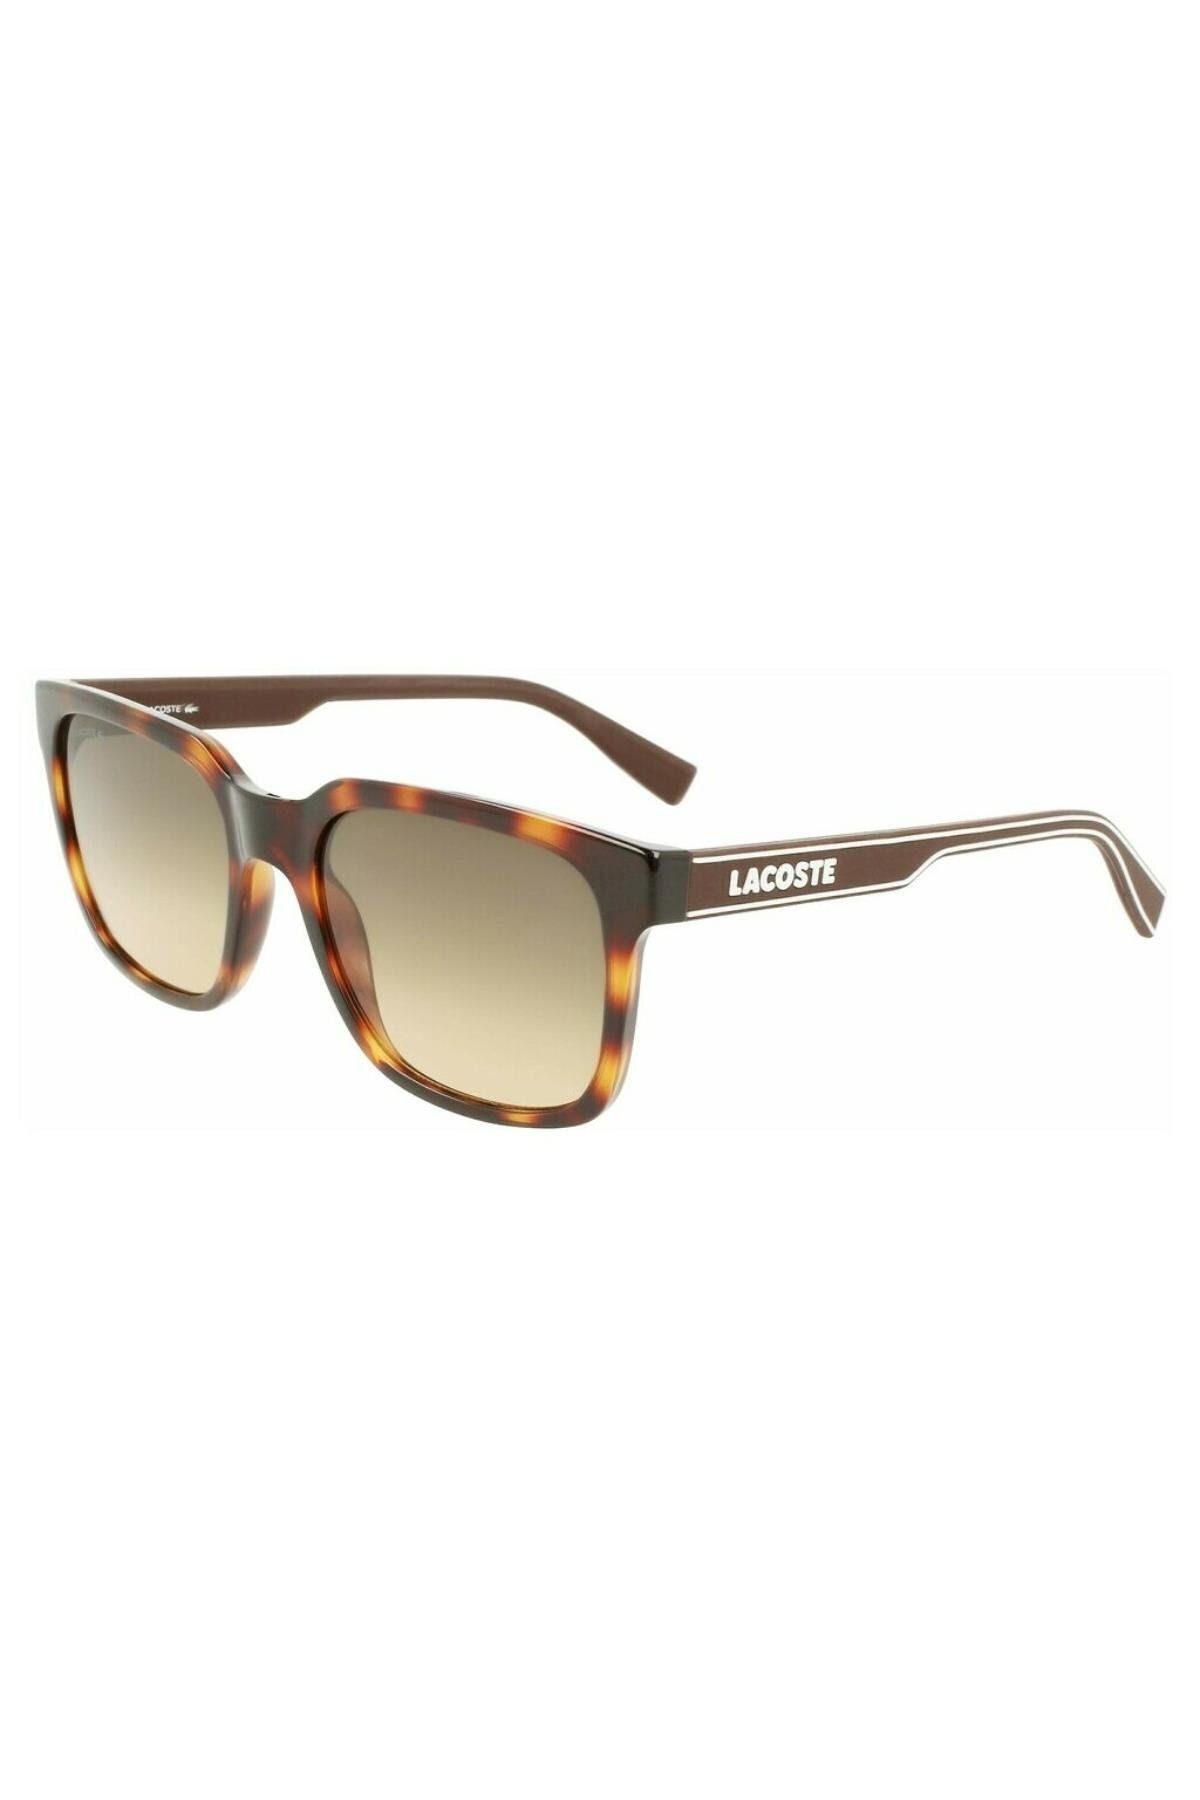 Lacoste L976S-30 55 عینک آفتابی یونیکس